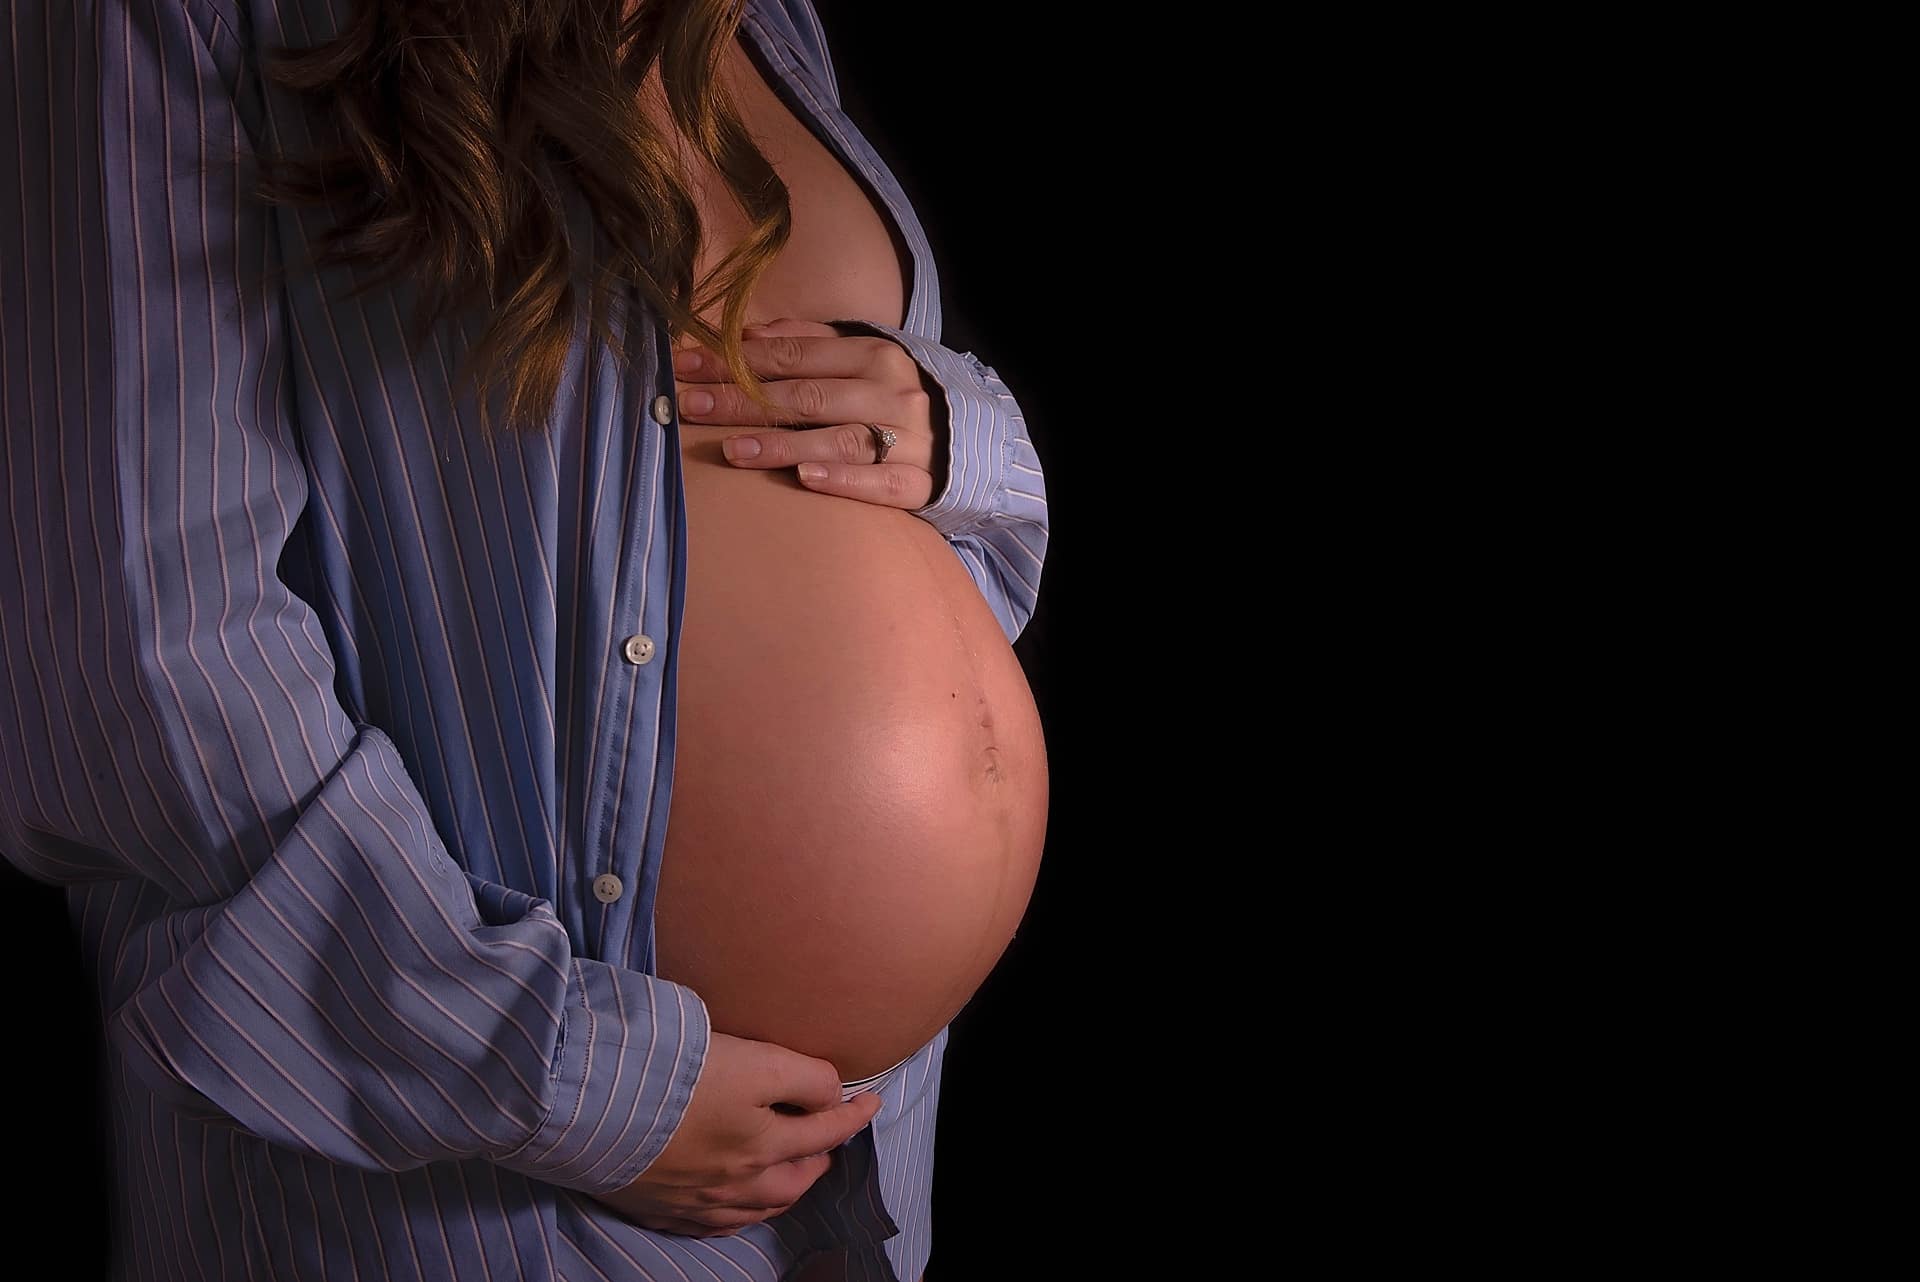 Nottingham Maternity,Bumps photographer - Rachael Phillips Photography in Mansfield, Nottingham